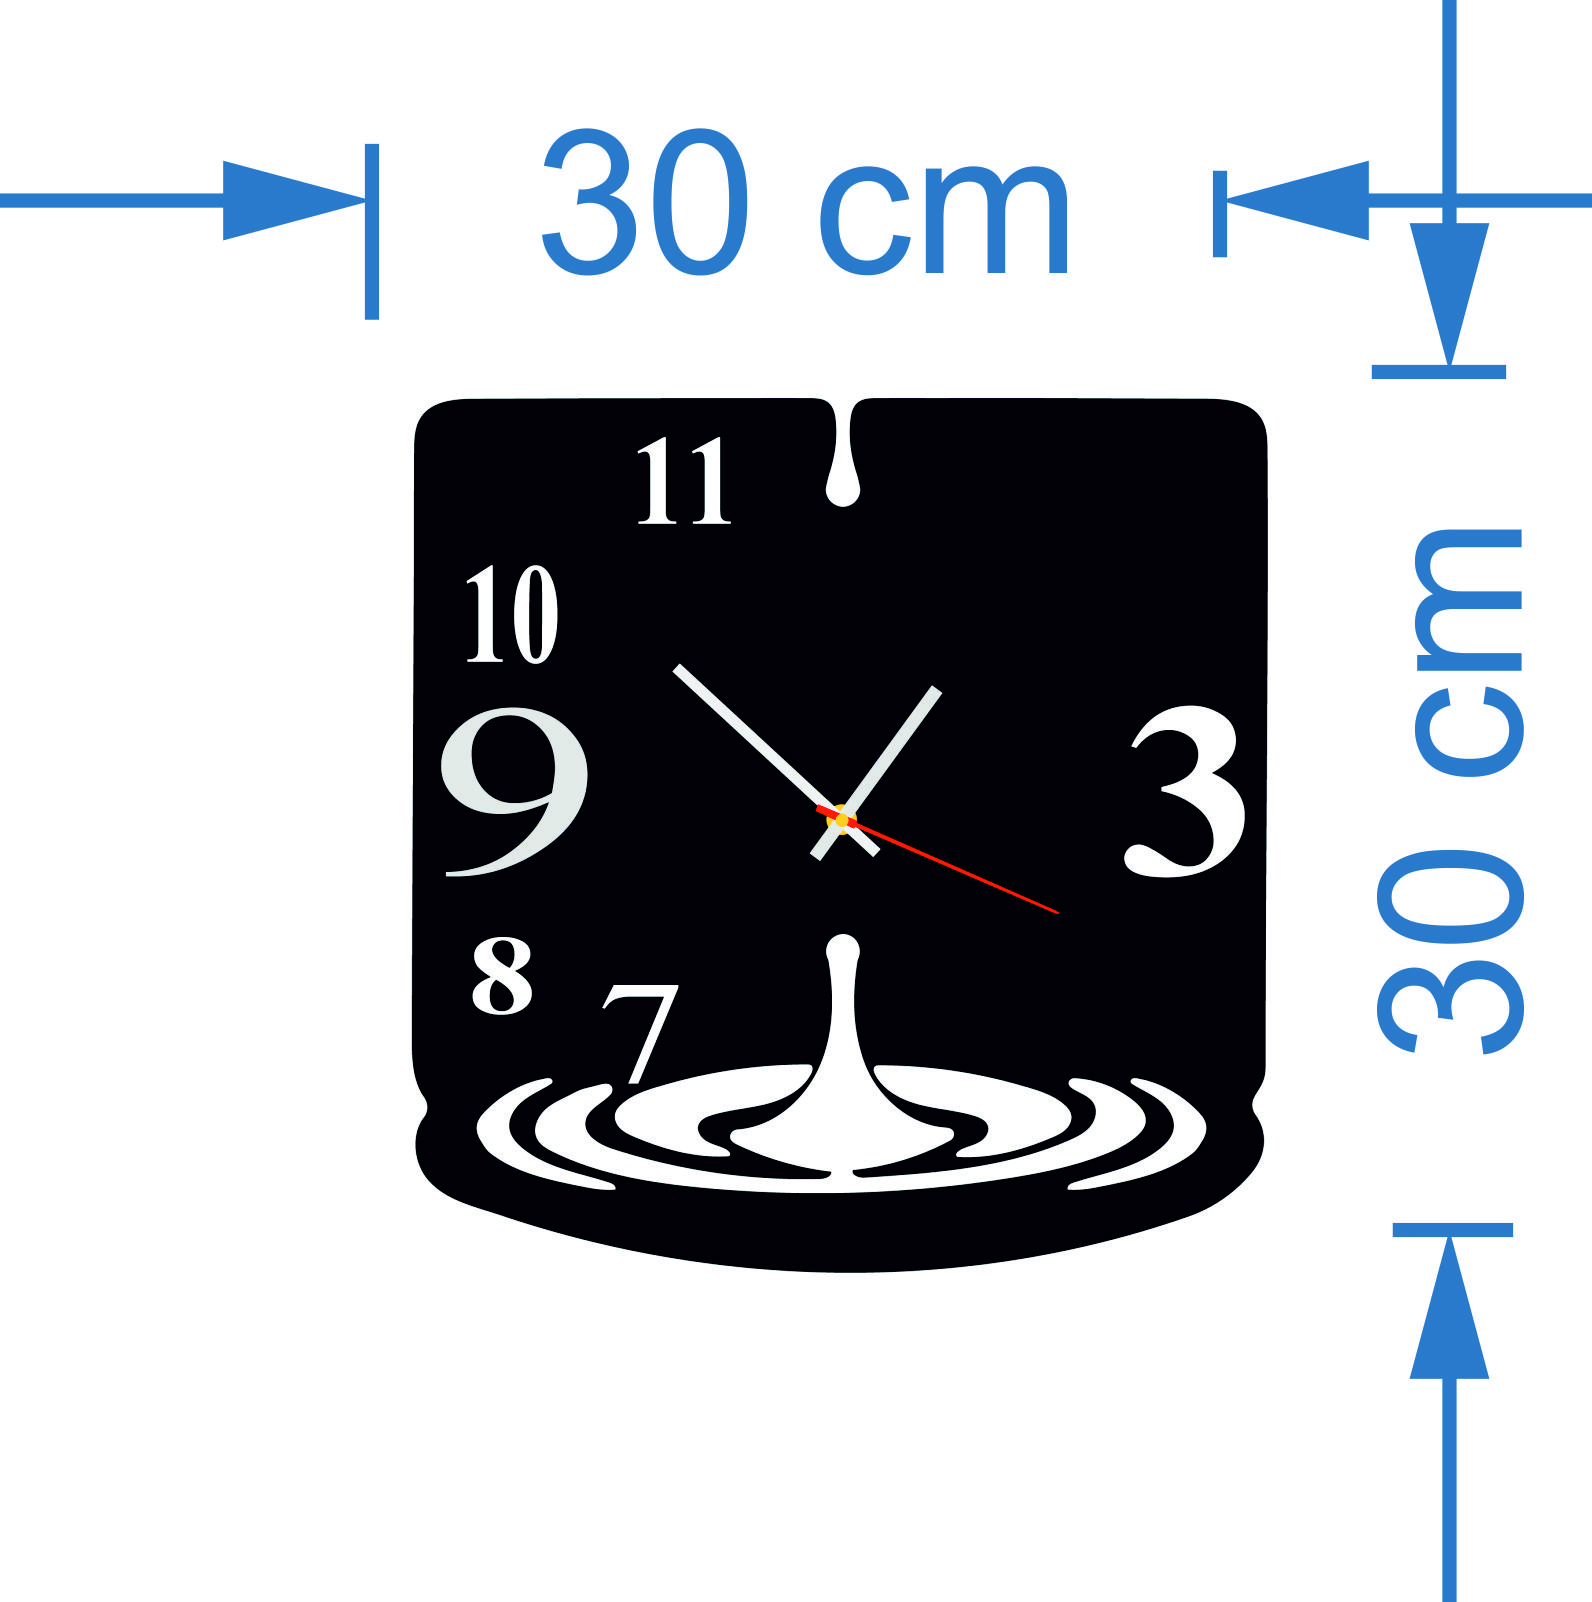 Wall Clock Size: